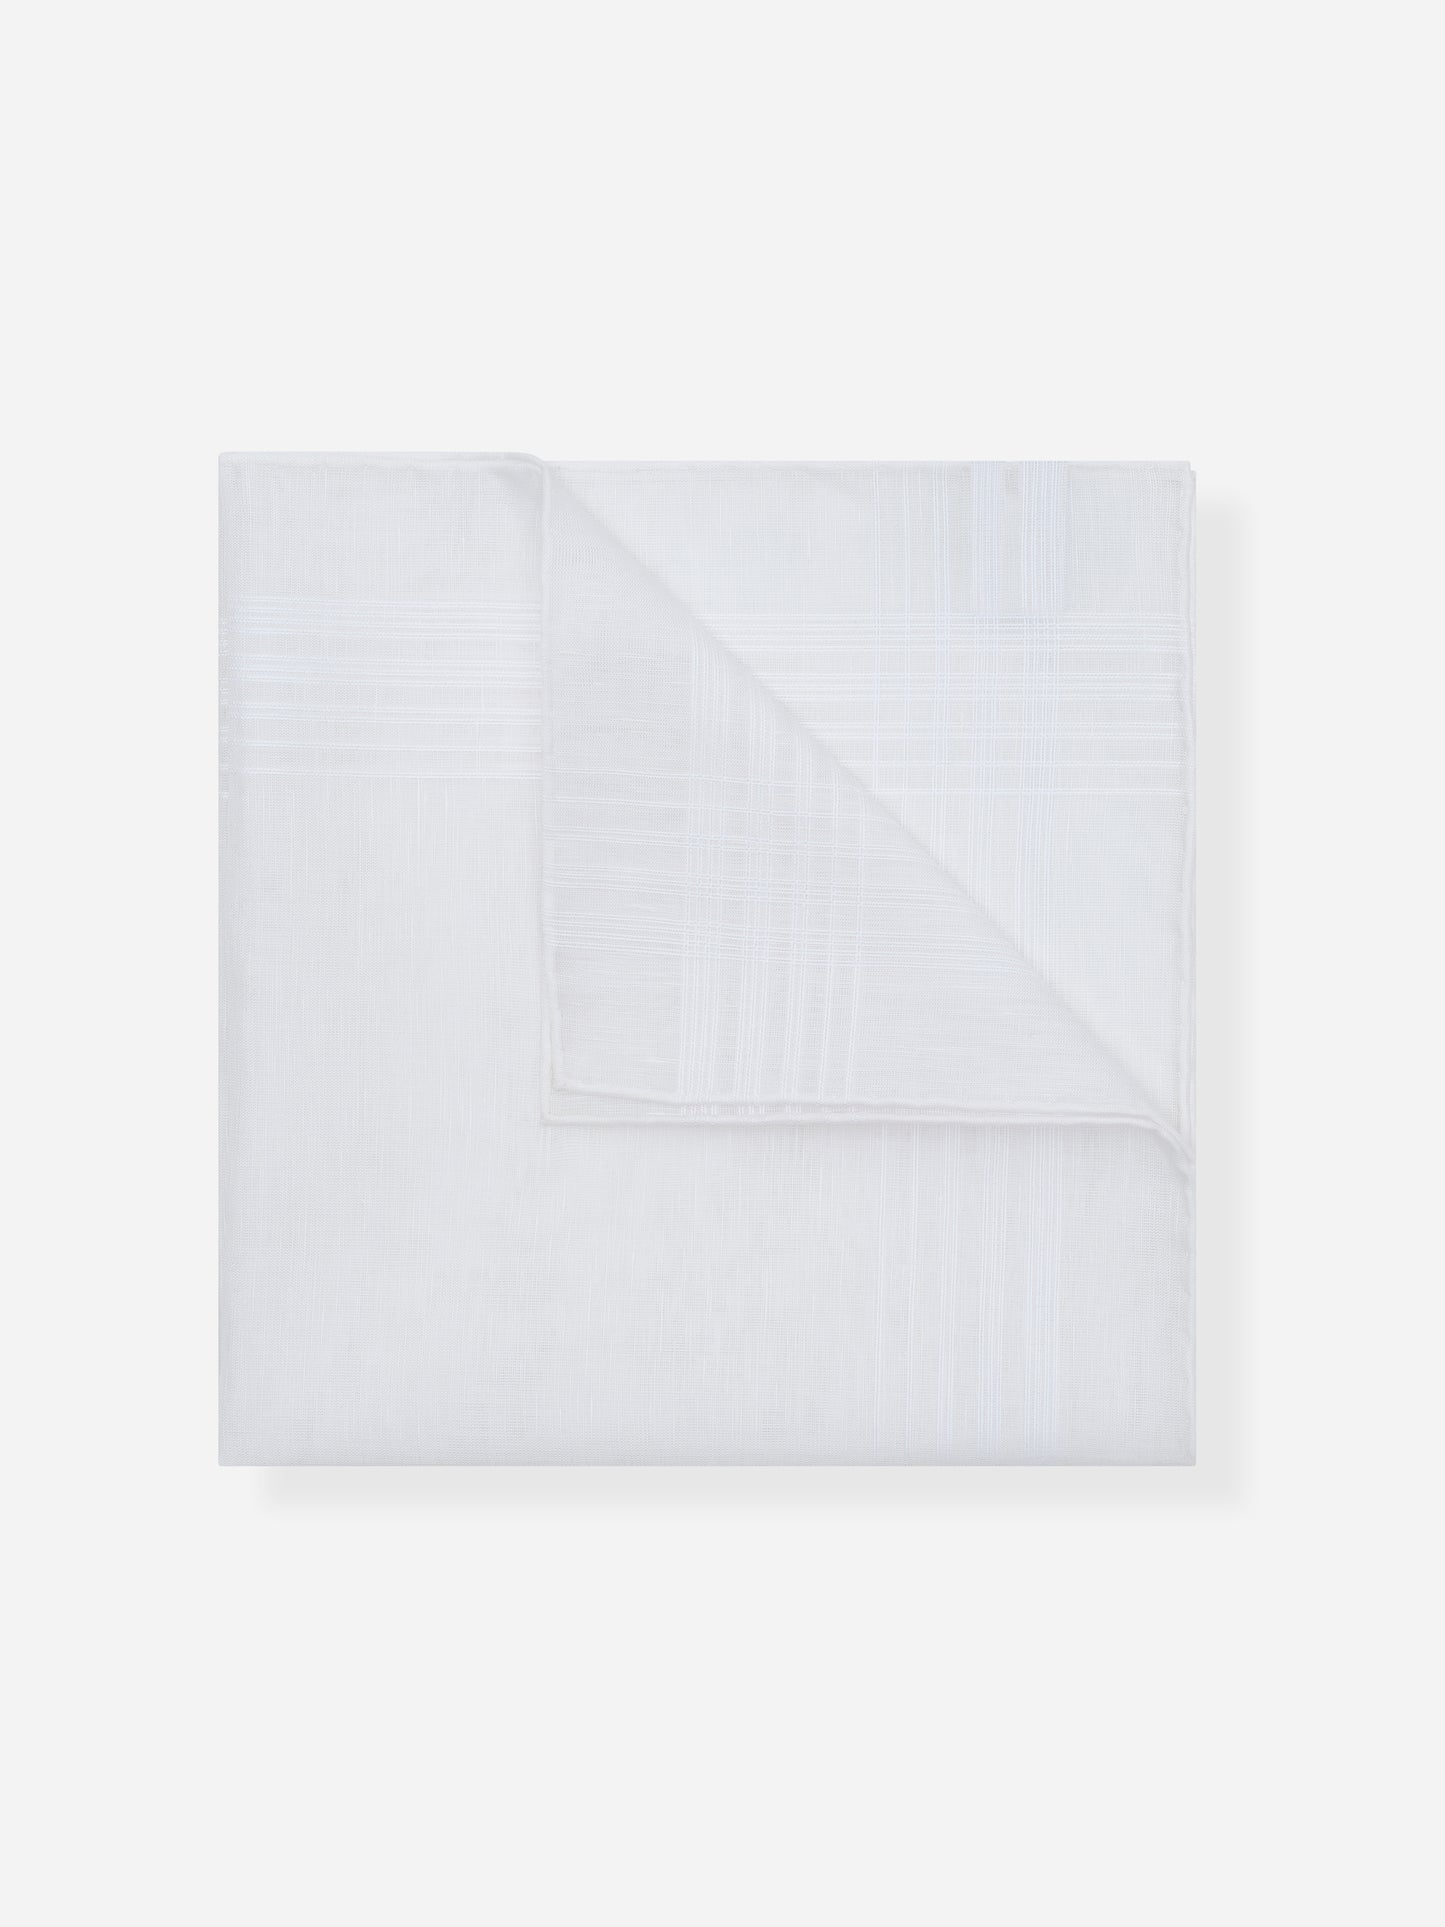 Antique Handkerchief - Oscar Hunt